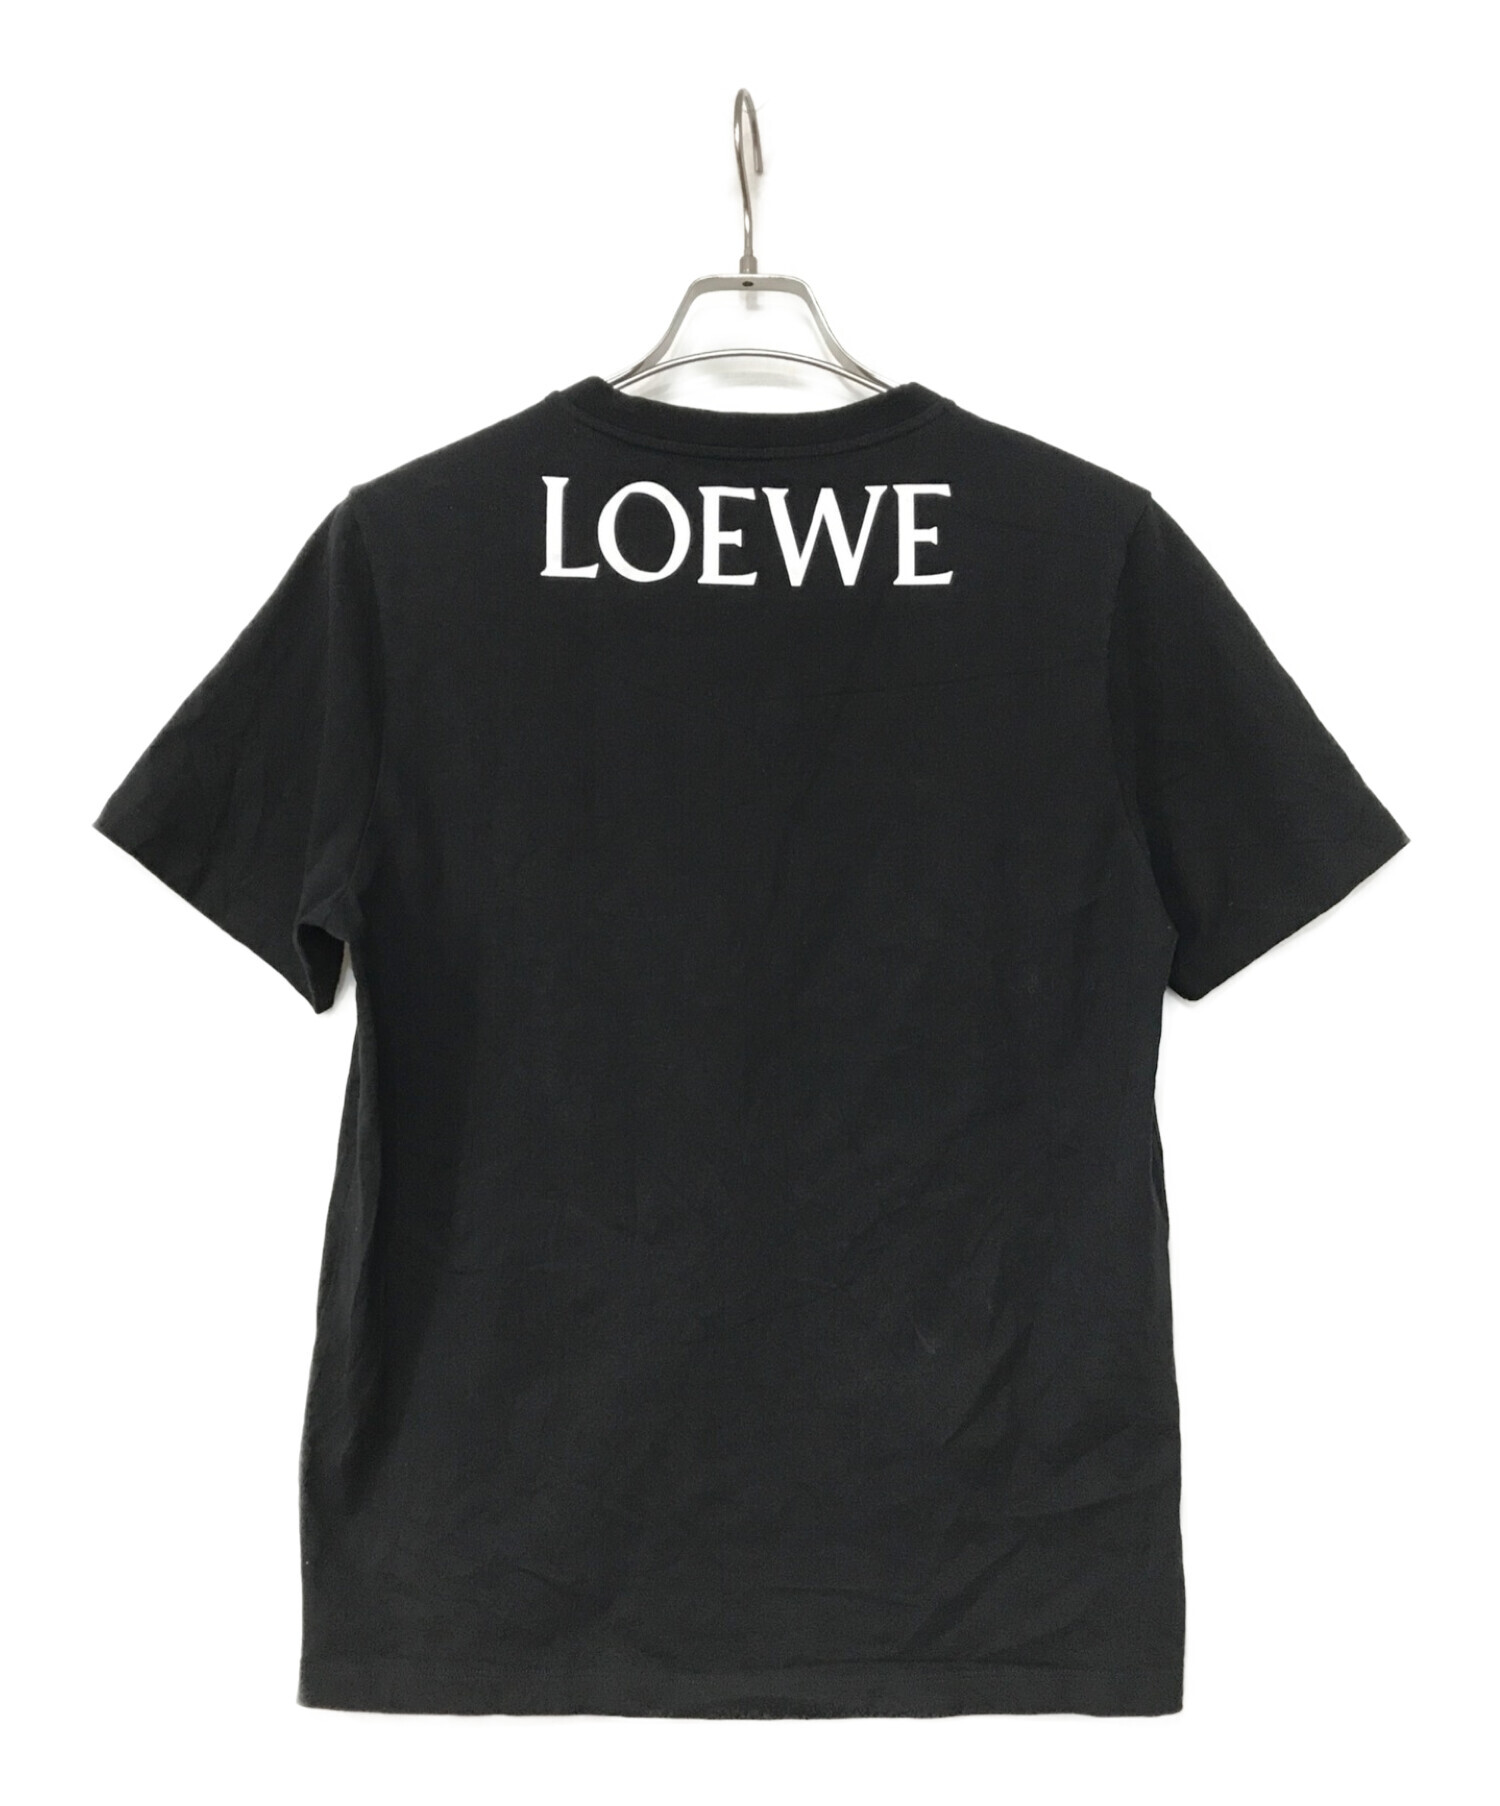 LOEWE (ロエベ) ジュエルプリント バックロゴ 半袖Tシャツ ブラック サイズ:S